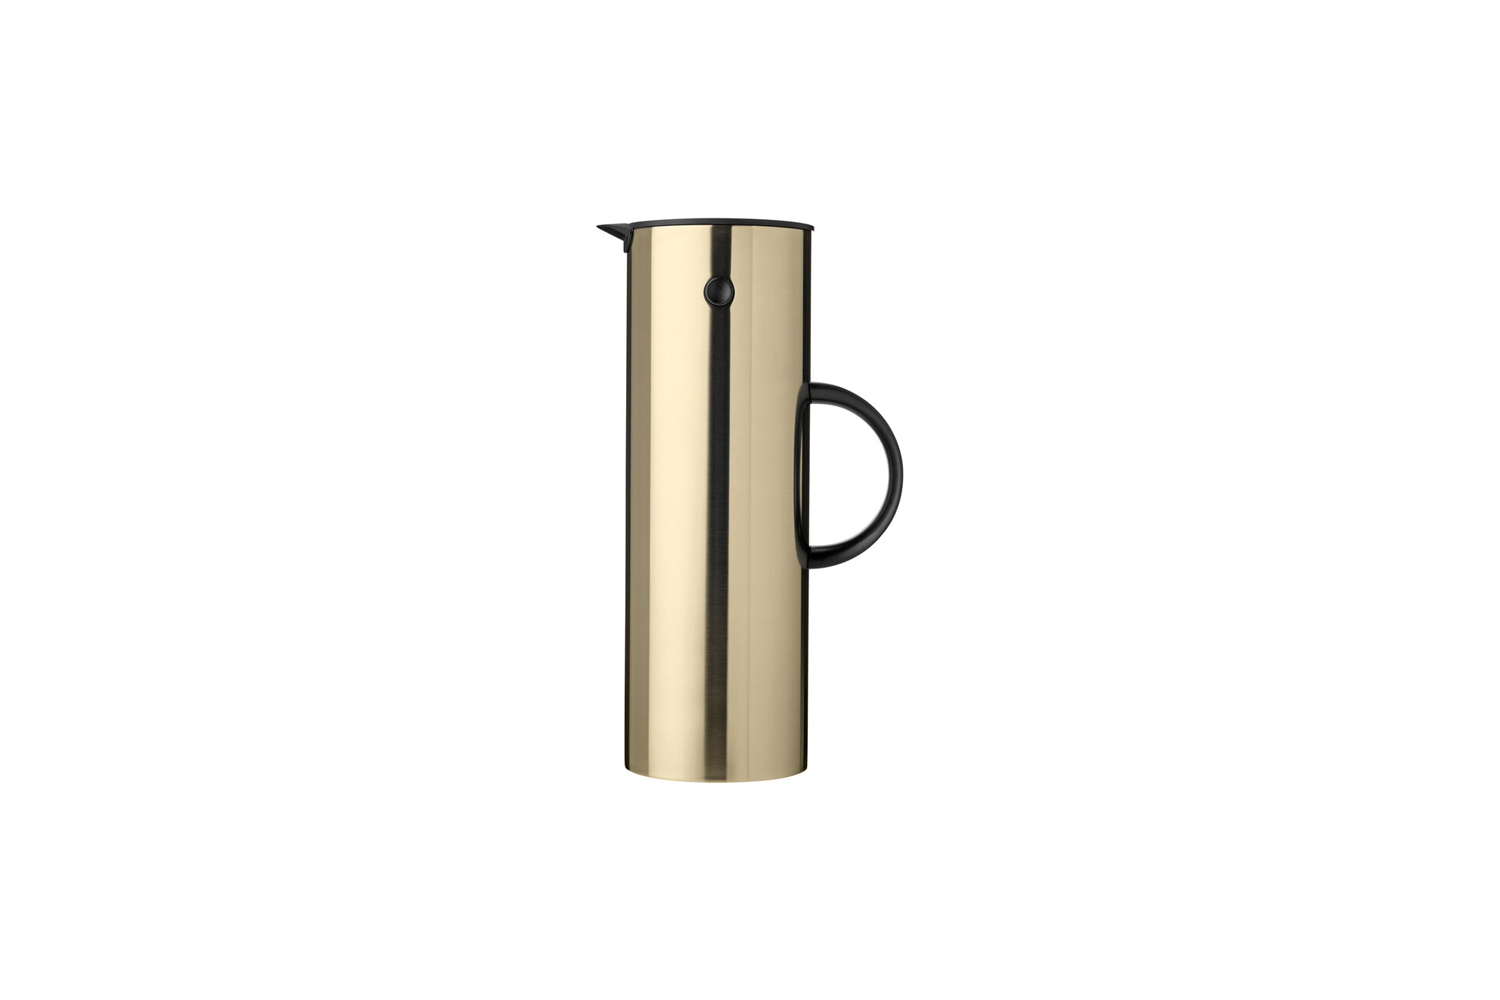 the stelton em77 vacuum jug in brass designed by erik magnussen is \$\15\1 at f 19